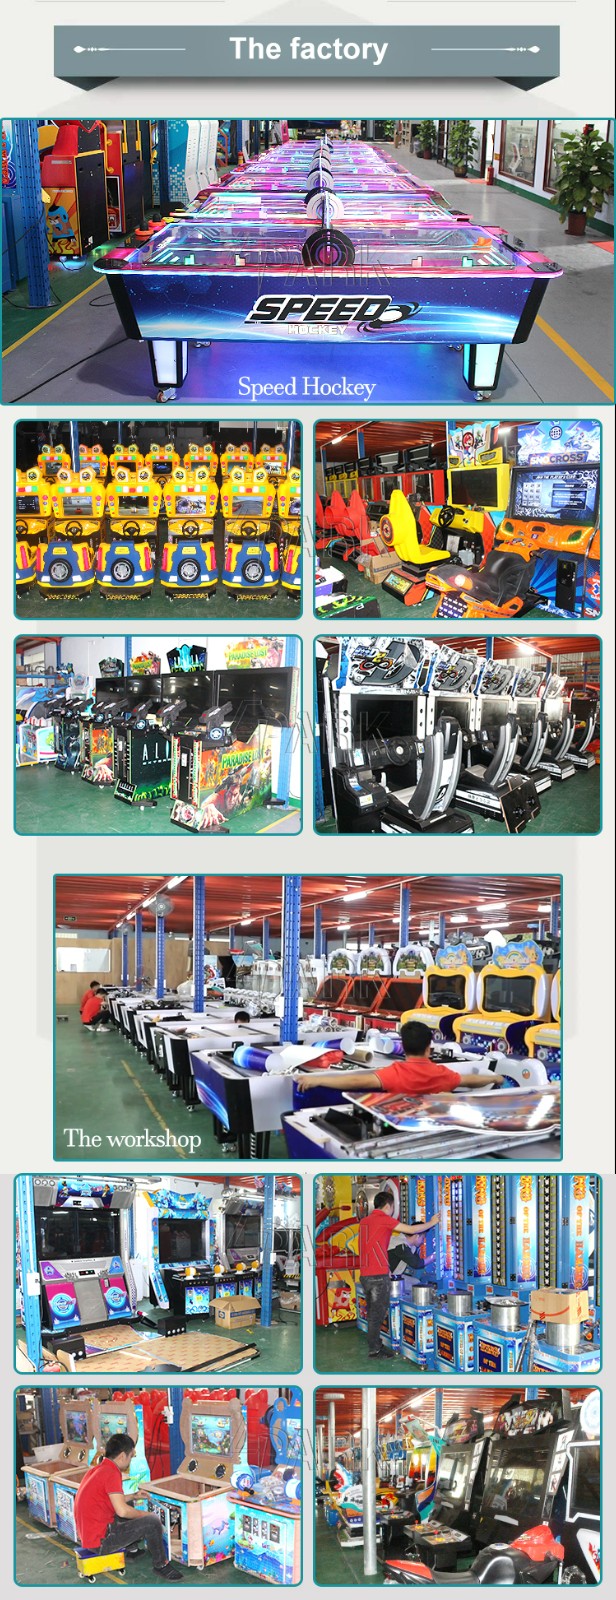 Robot Park Ireland Electronic Games Chinese Prize Award Virtual Arcade New Children Amusement Pinball Machine